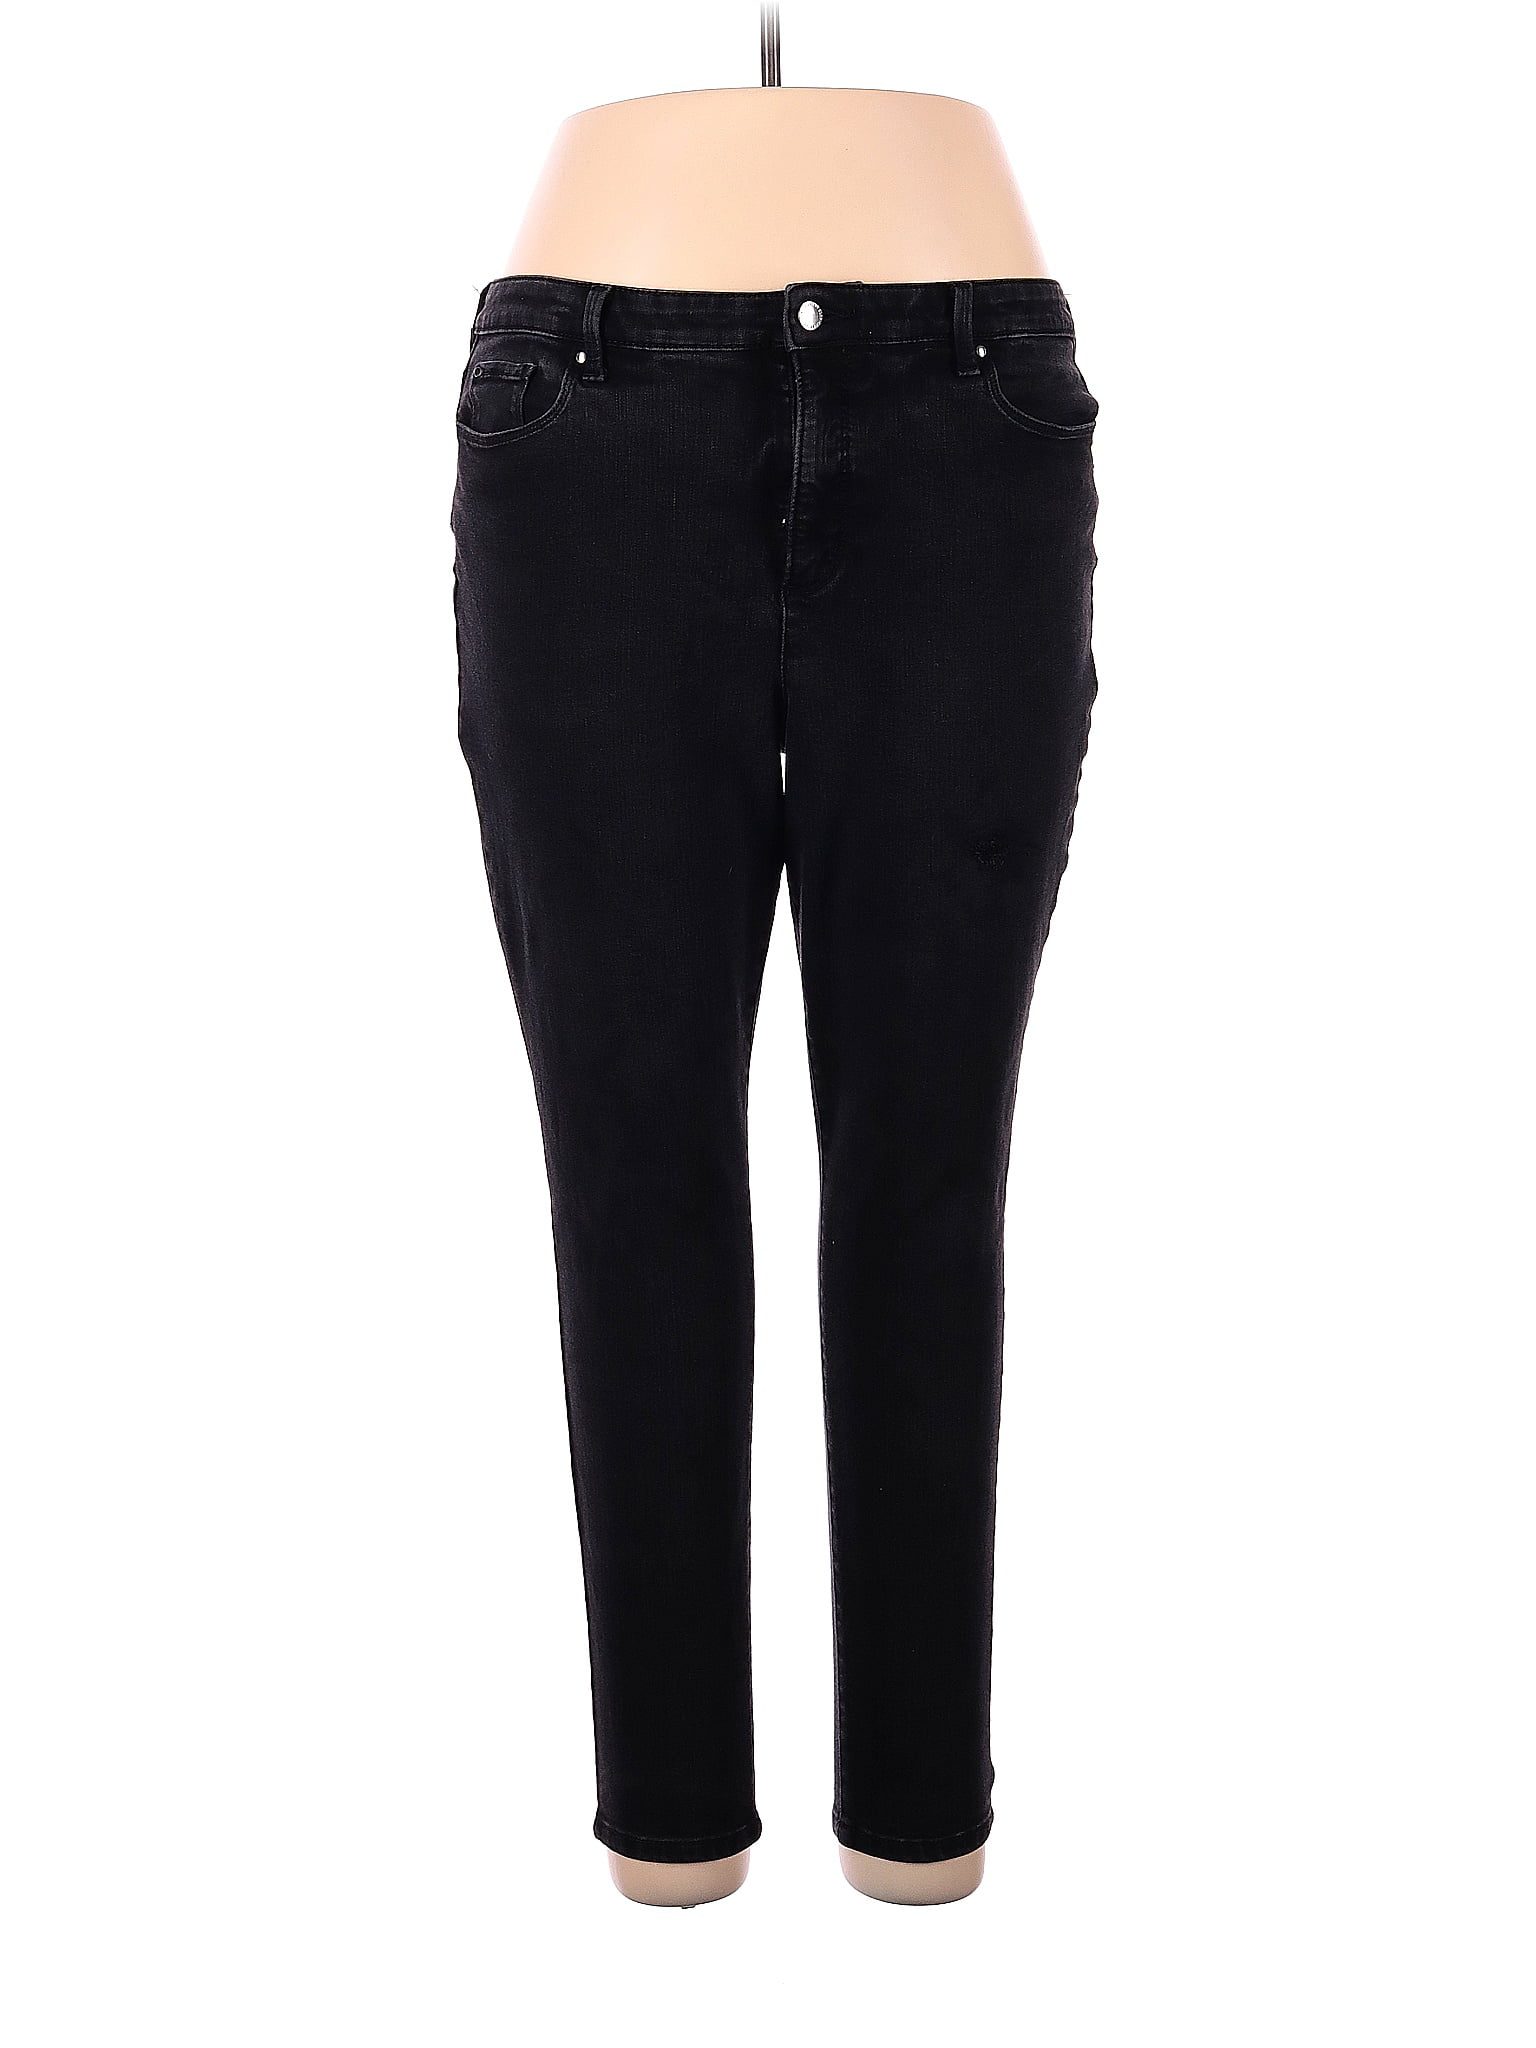 Charter Club Womens Black Denim Mid-Rise Boot Cut Jeans Plus 14W BHFO 1440 